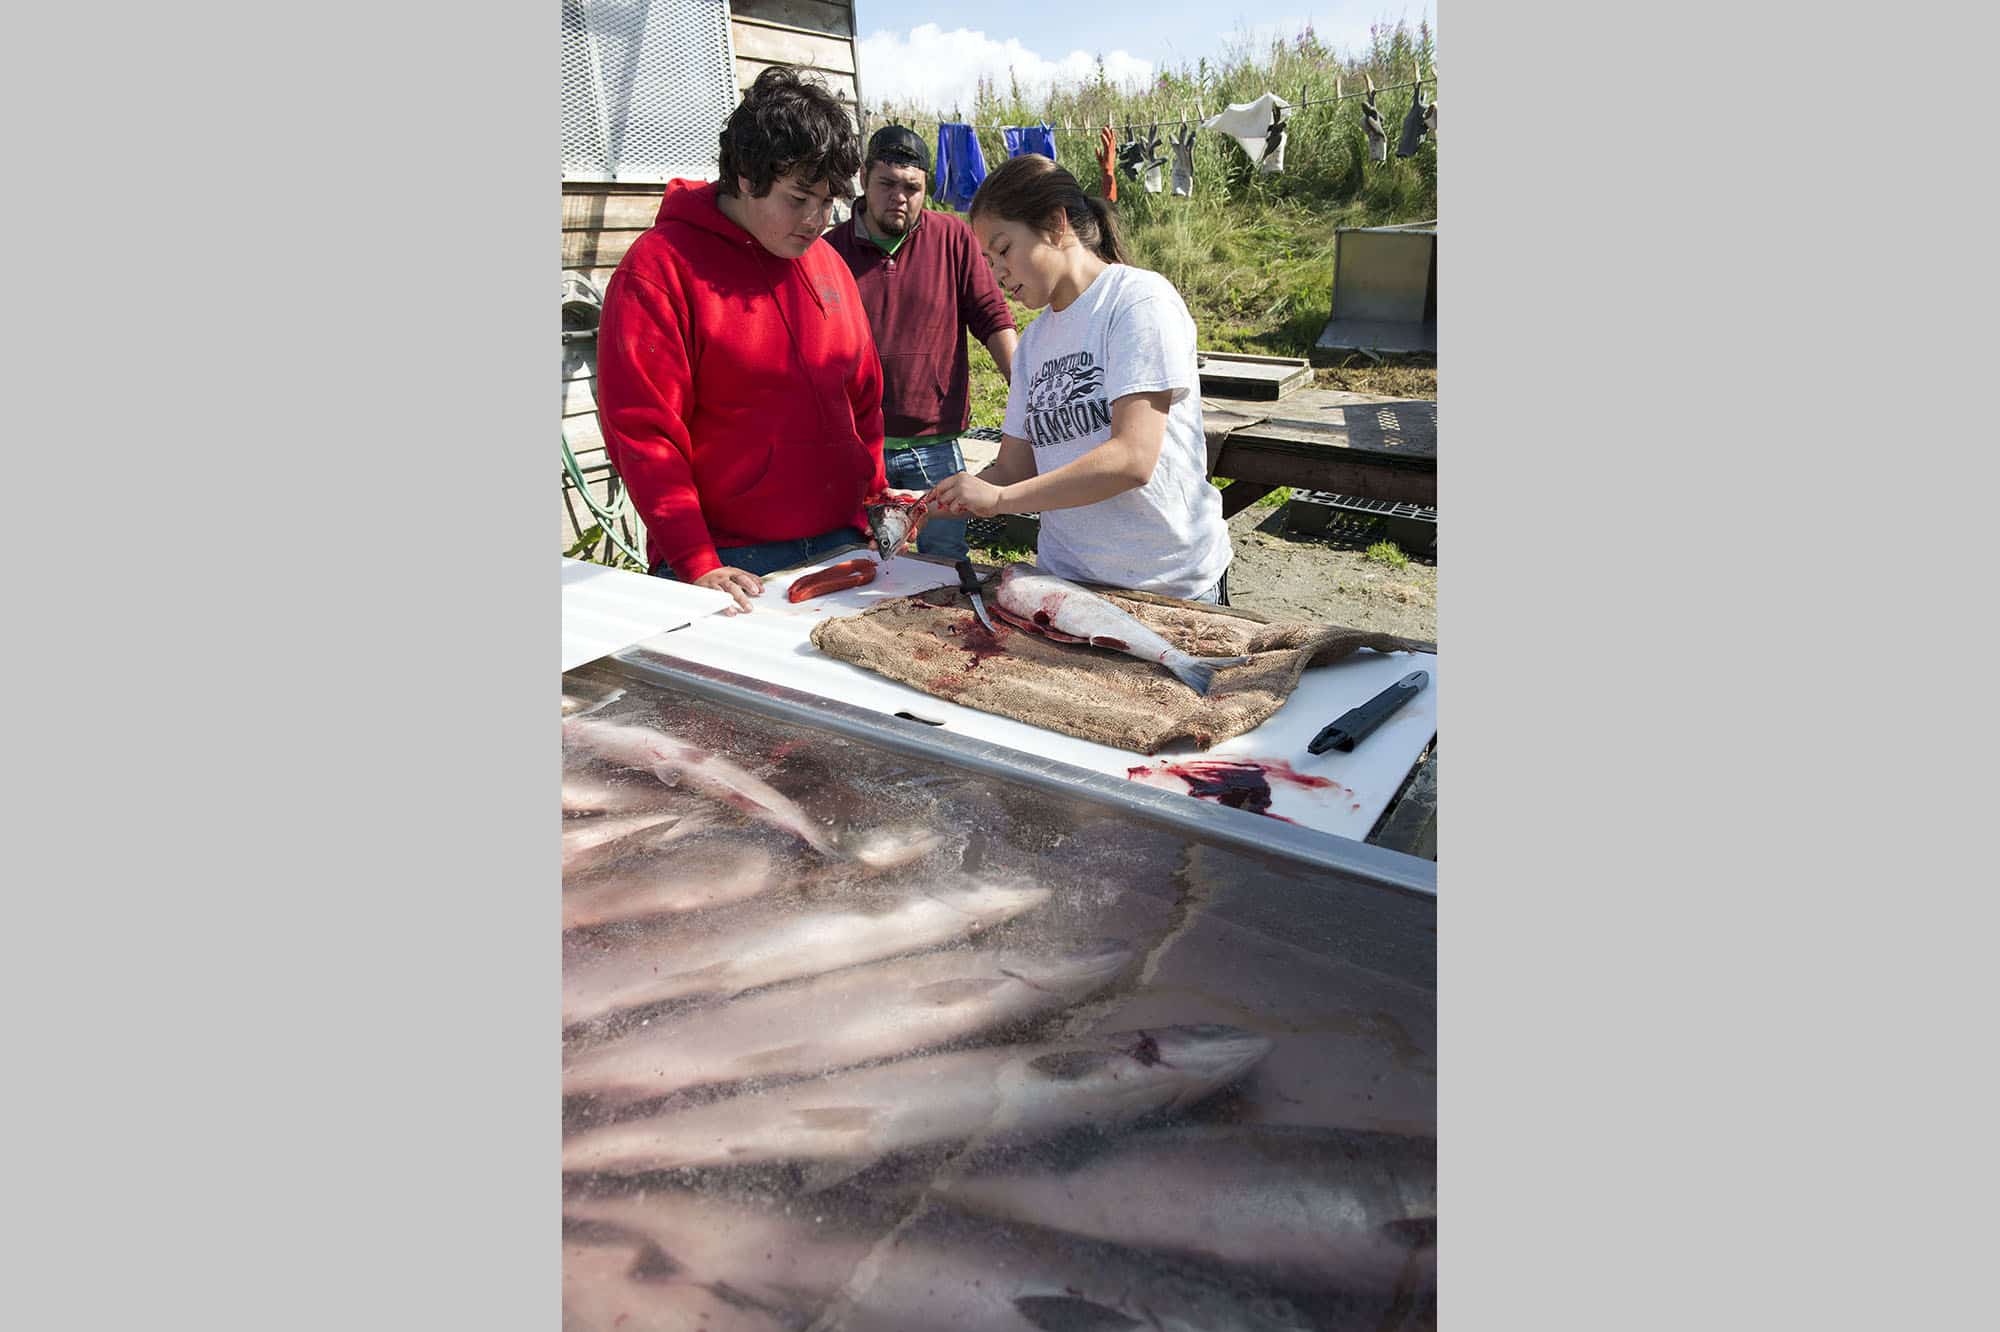 Joshua Grosvold, Jonny Wilson and Julianne Wilson process salmon at the tribe’s educational fishery site.